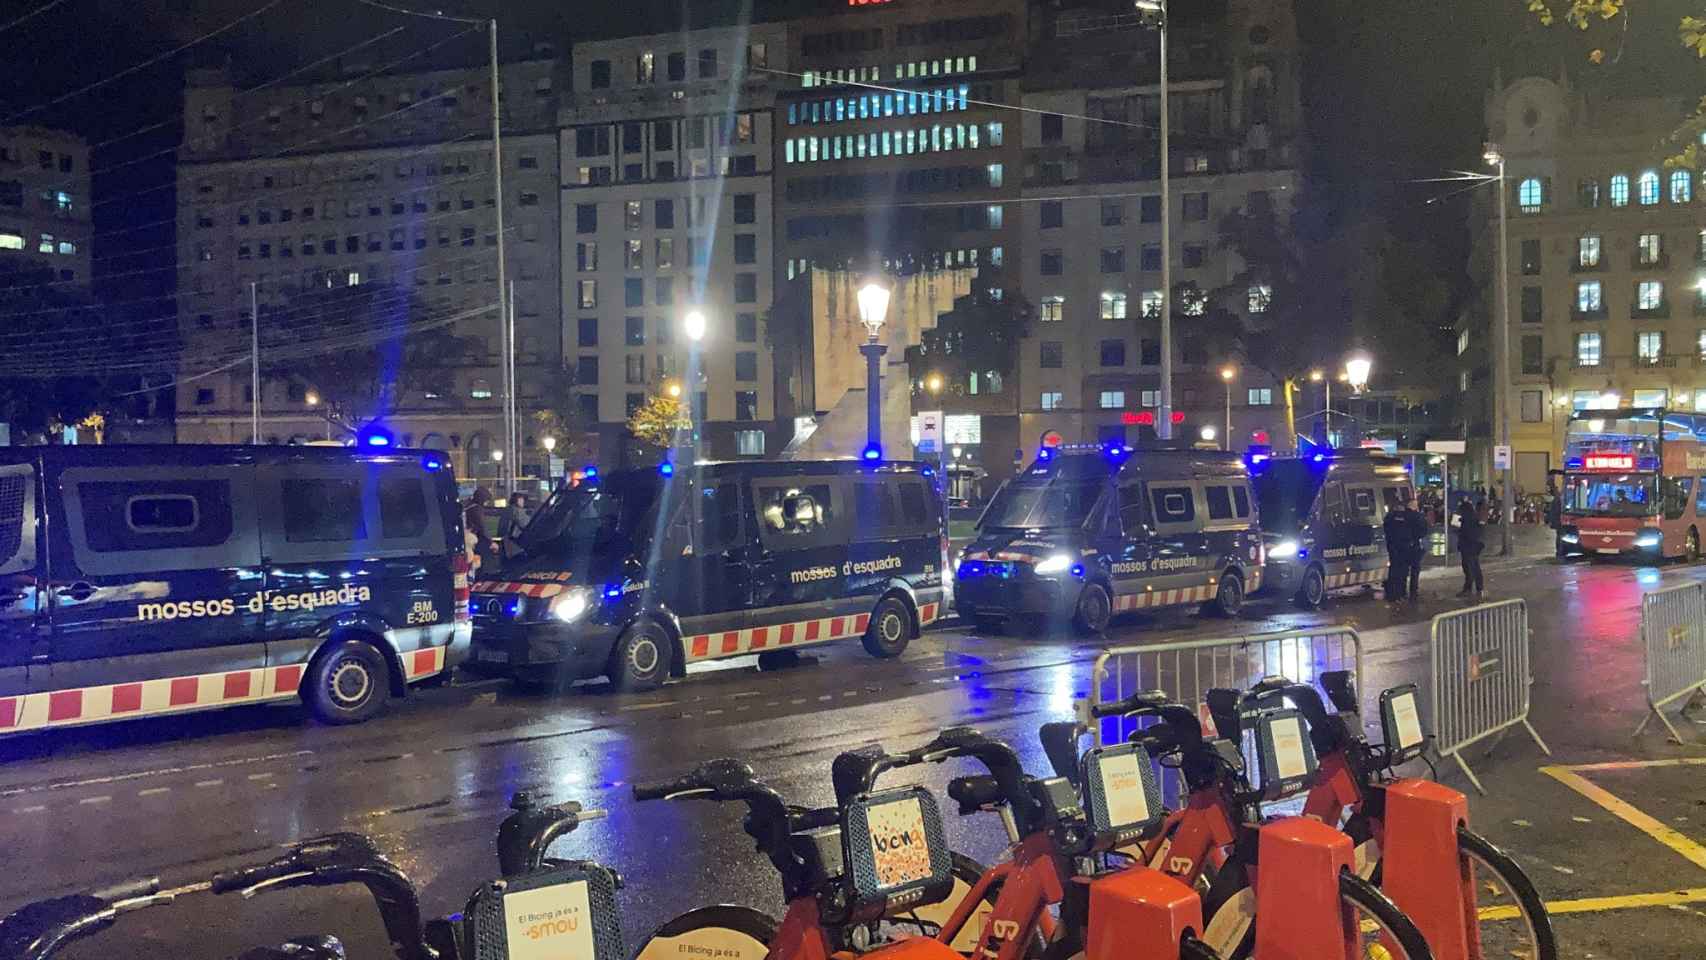 Mossos d'Esquadra en la plaza de Catalunya después de los incidentes de los 'hooligans' del Benfica / SARA CASAS